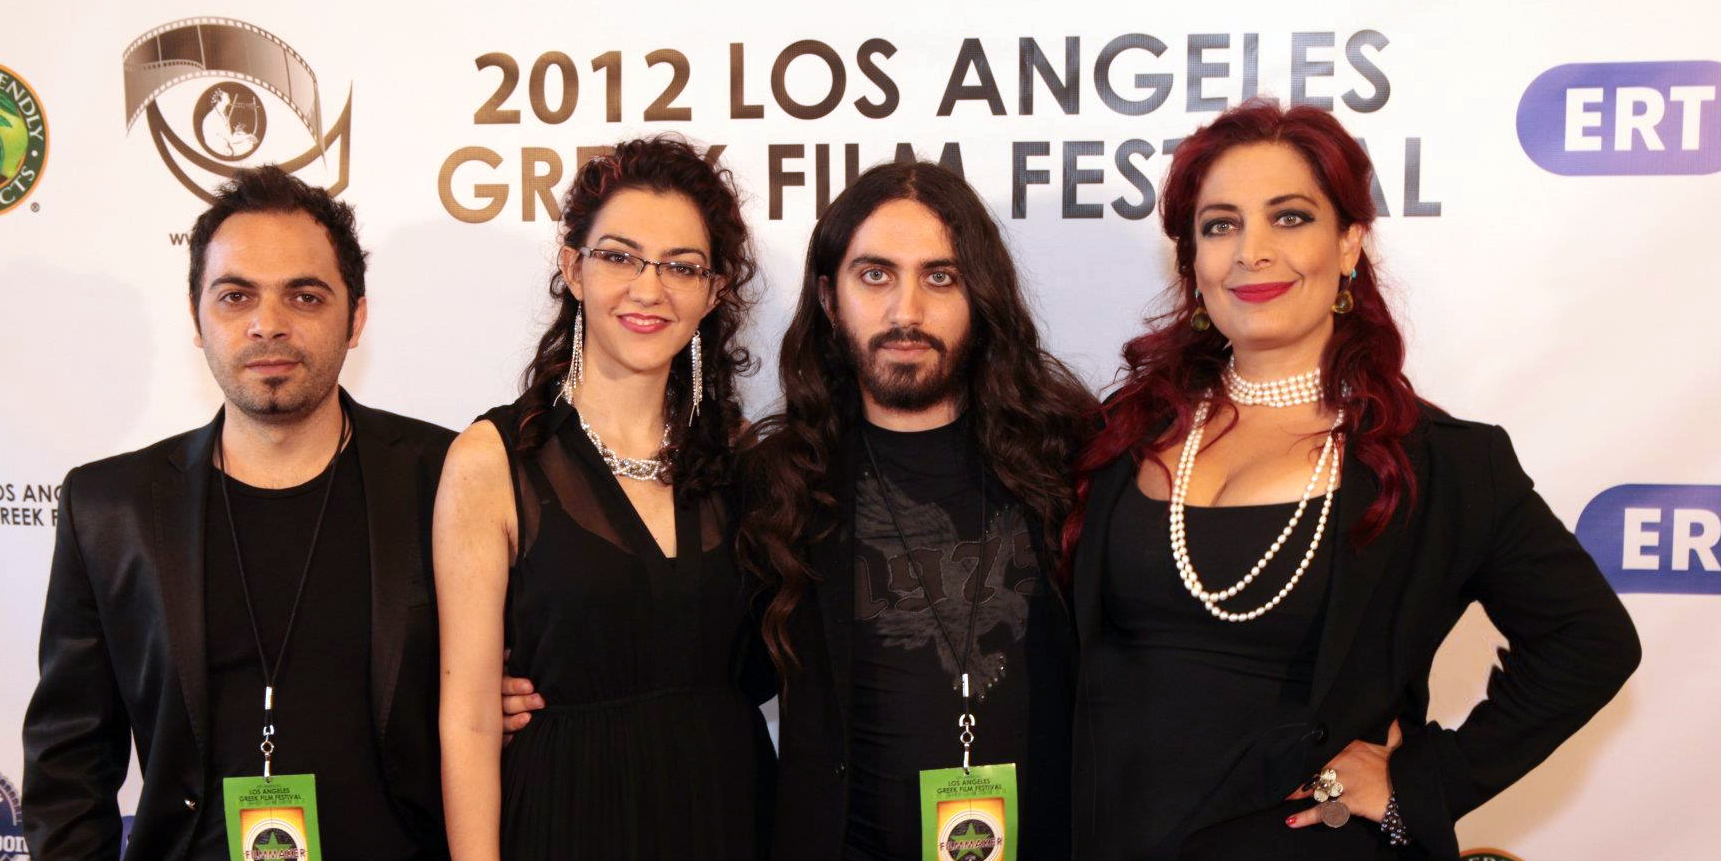 Los Angeles Greek Film Festival - 2012 With Alexandros Isaias, Constantinos Isaias, and Alexia Vassiliou